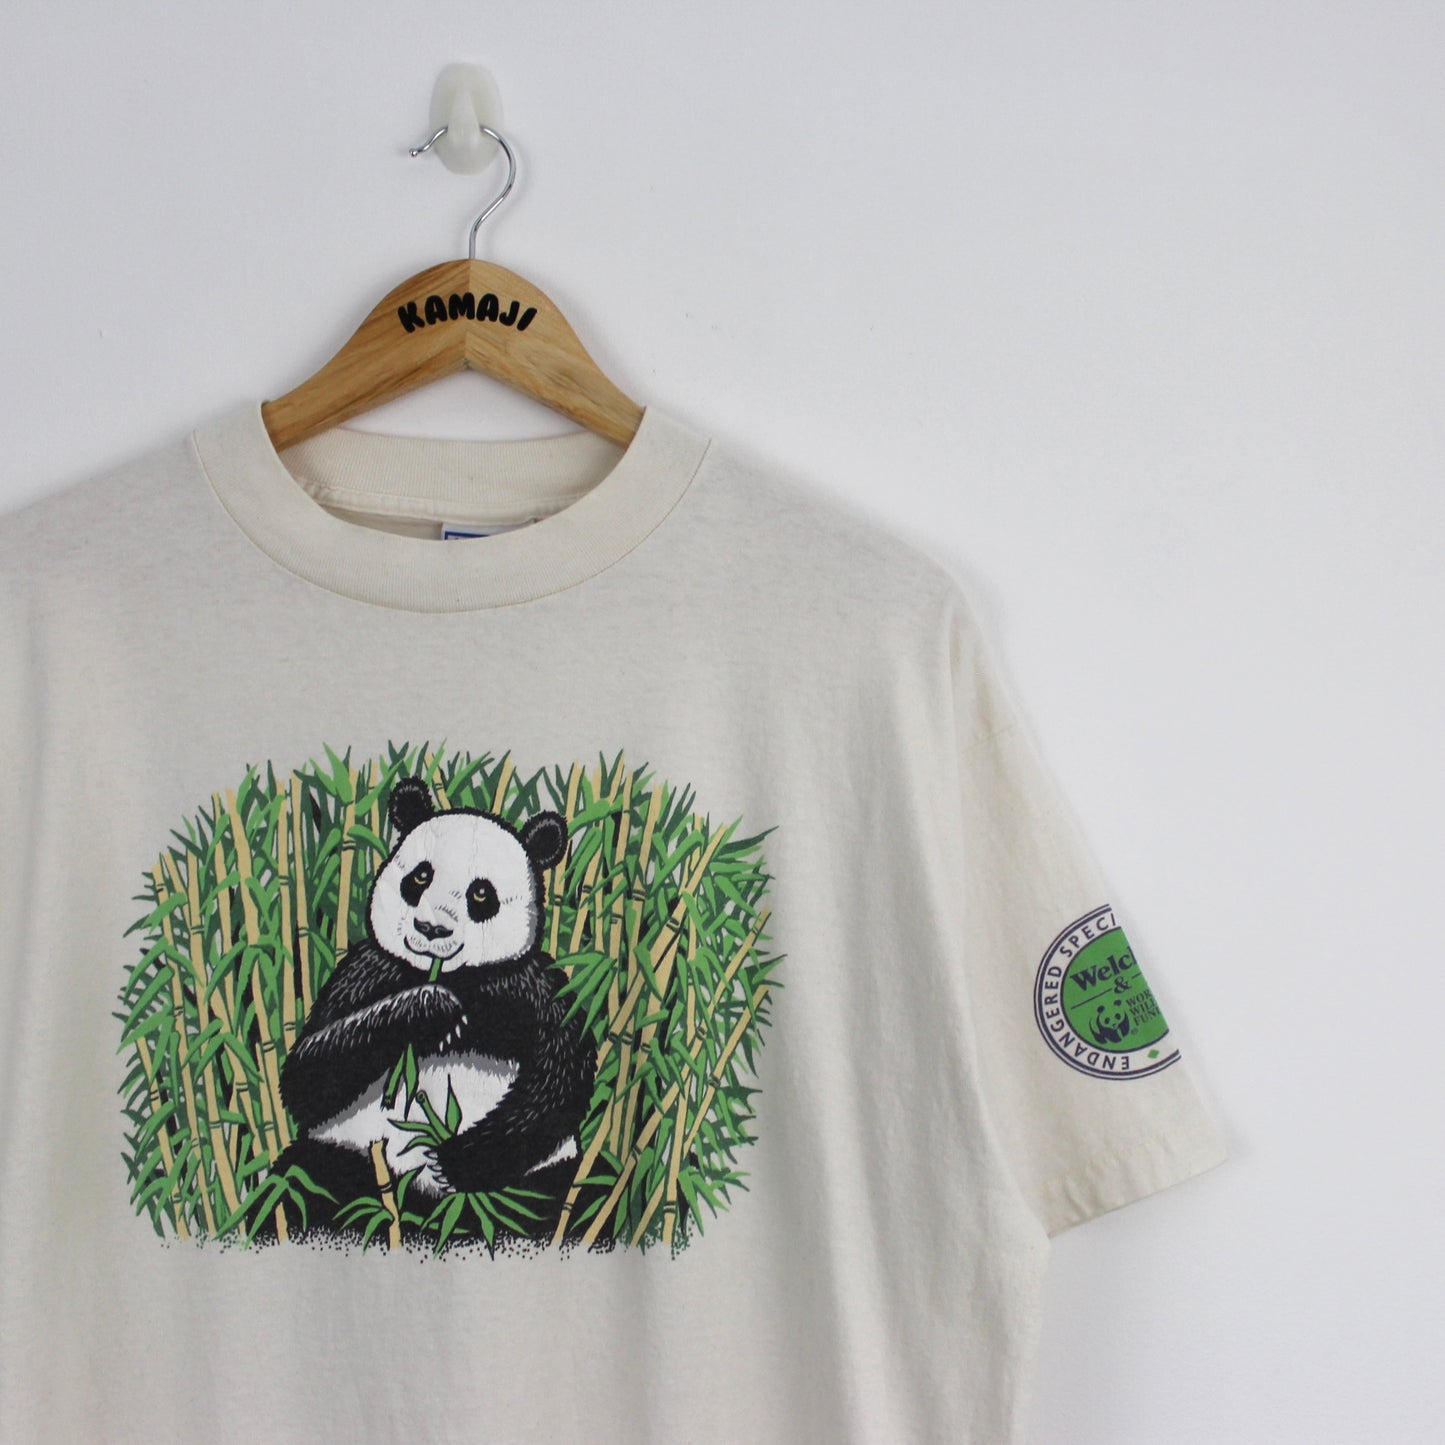 Panda Bear WWF Vintage Single Stitch T-Shirt 1990s Endangered Species Collection (XL)